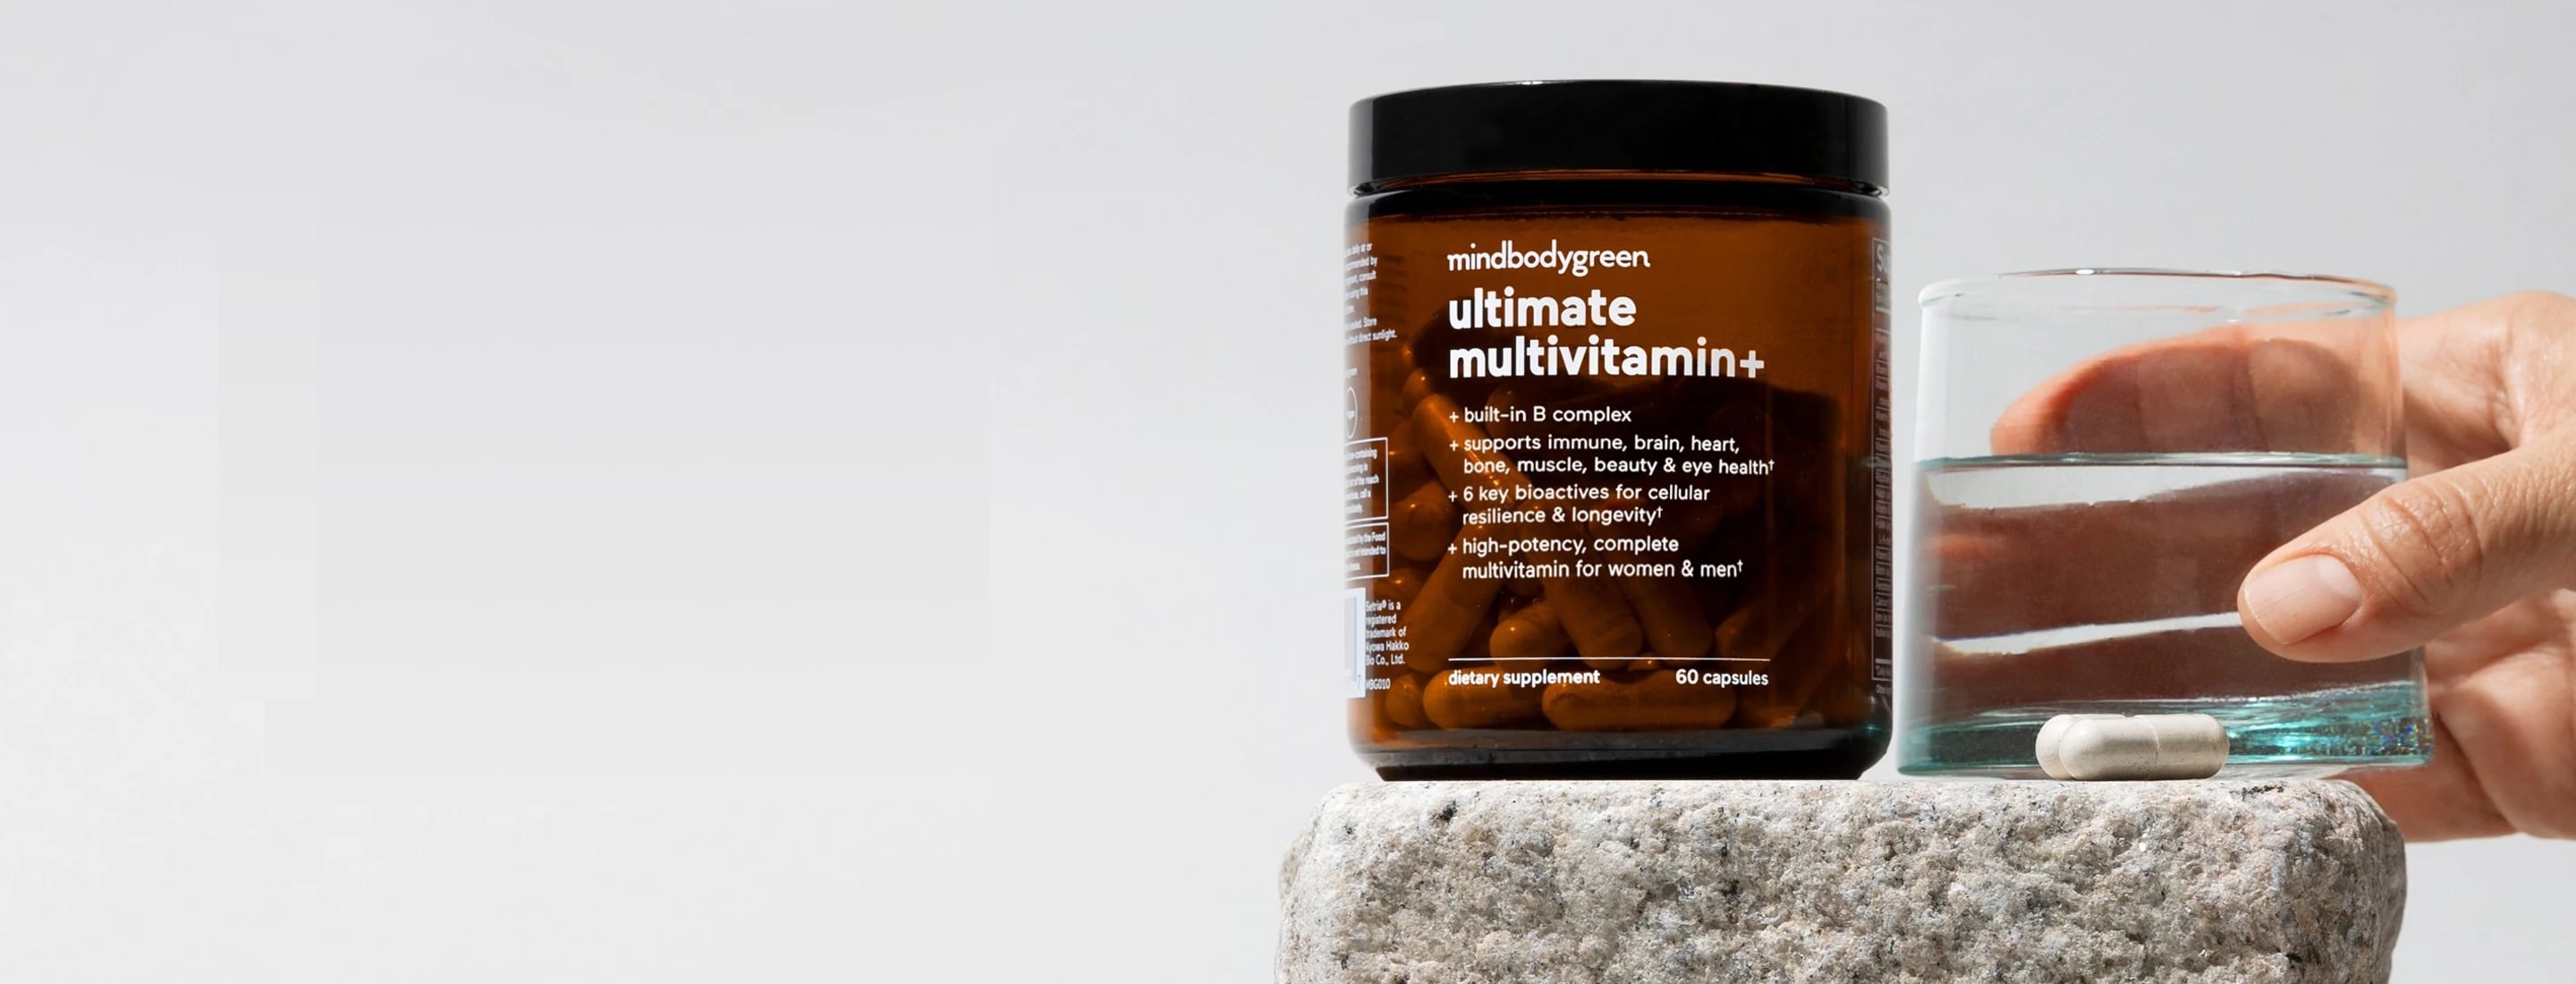 Ultimate multivitamin+. Antioxidant heroes battling for longevity. Shop now.